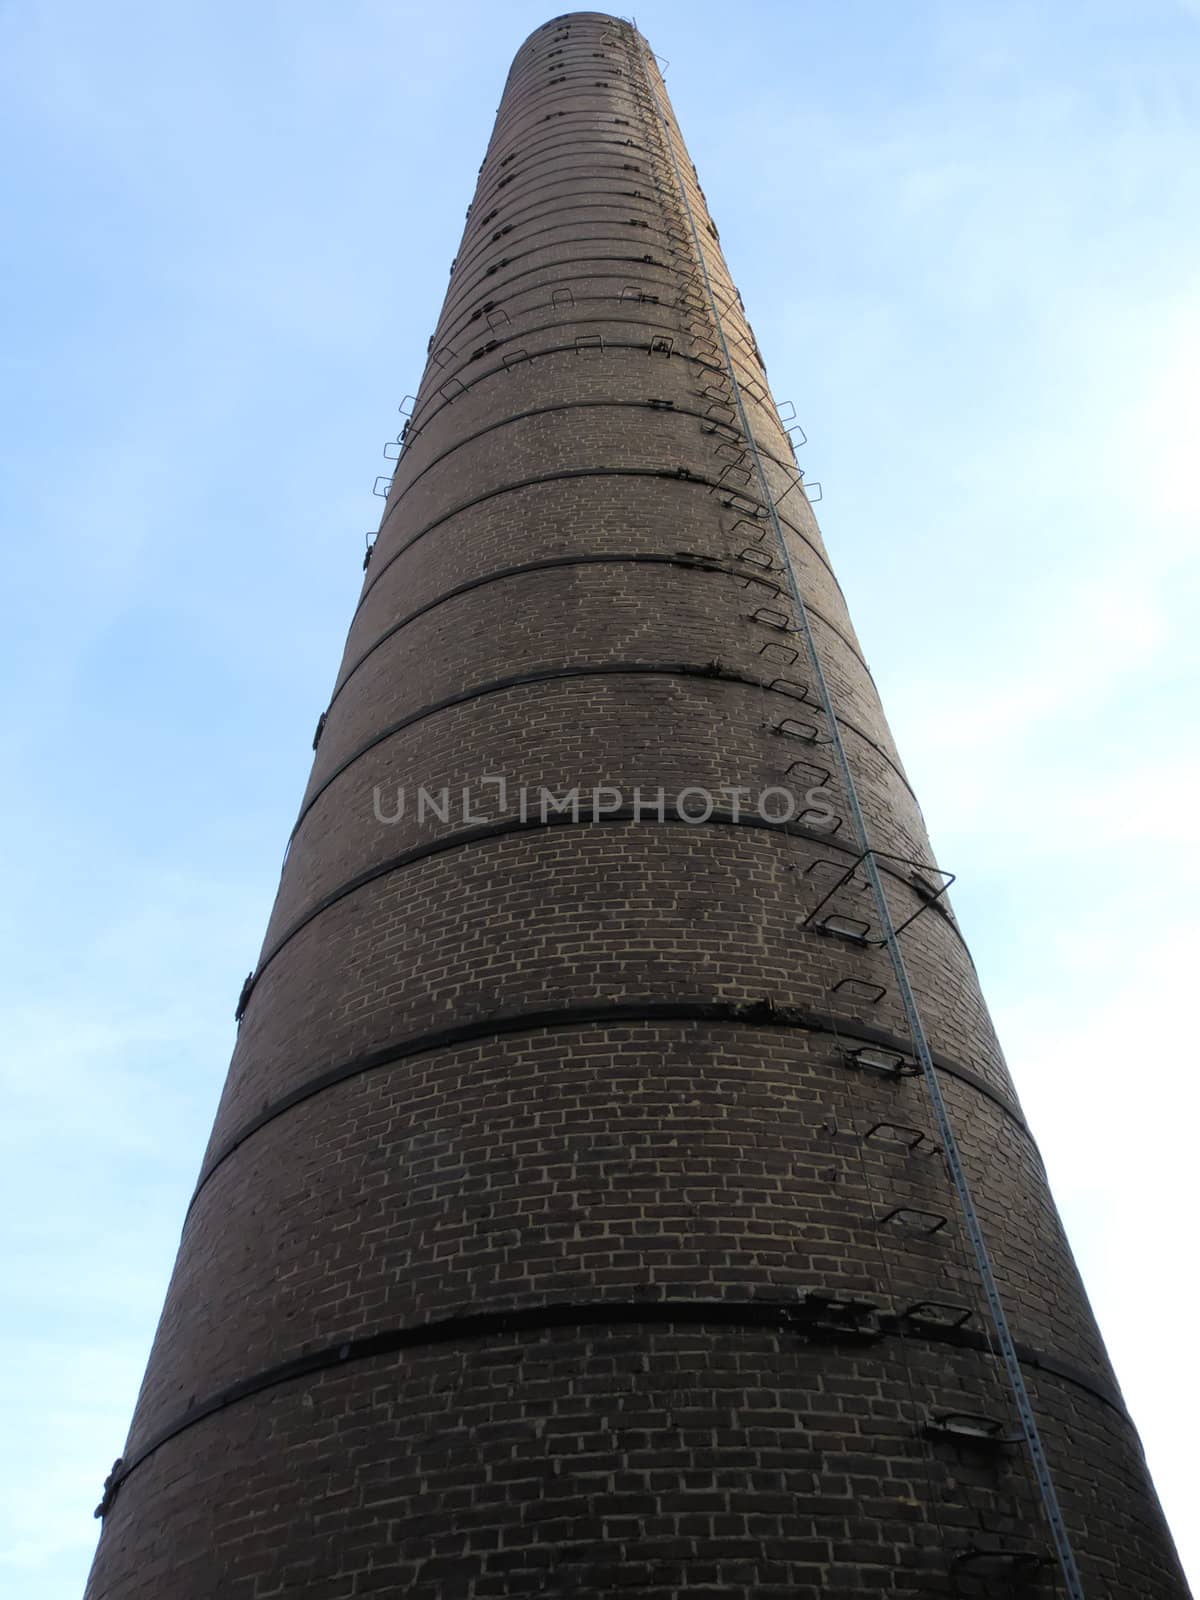 brick chimney in a factory by njaj